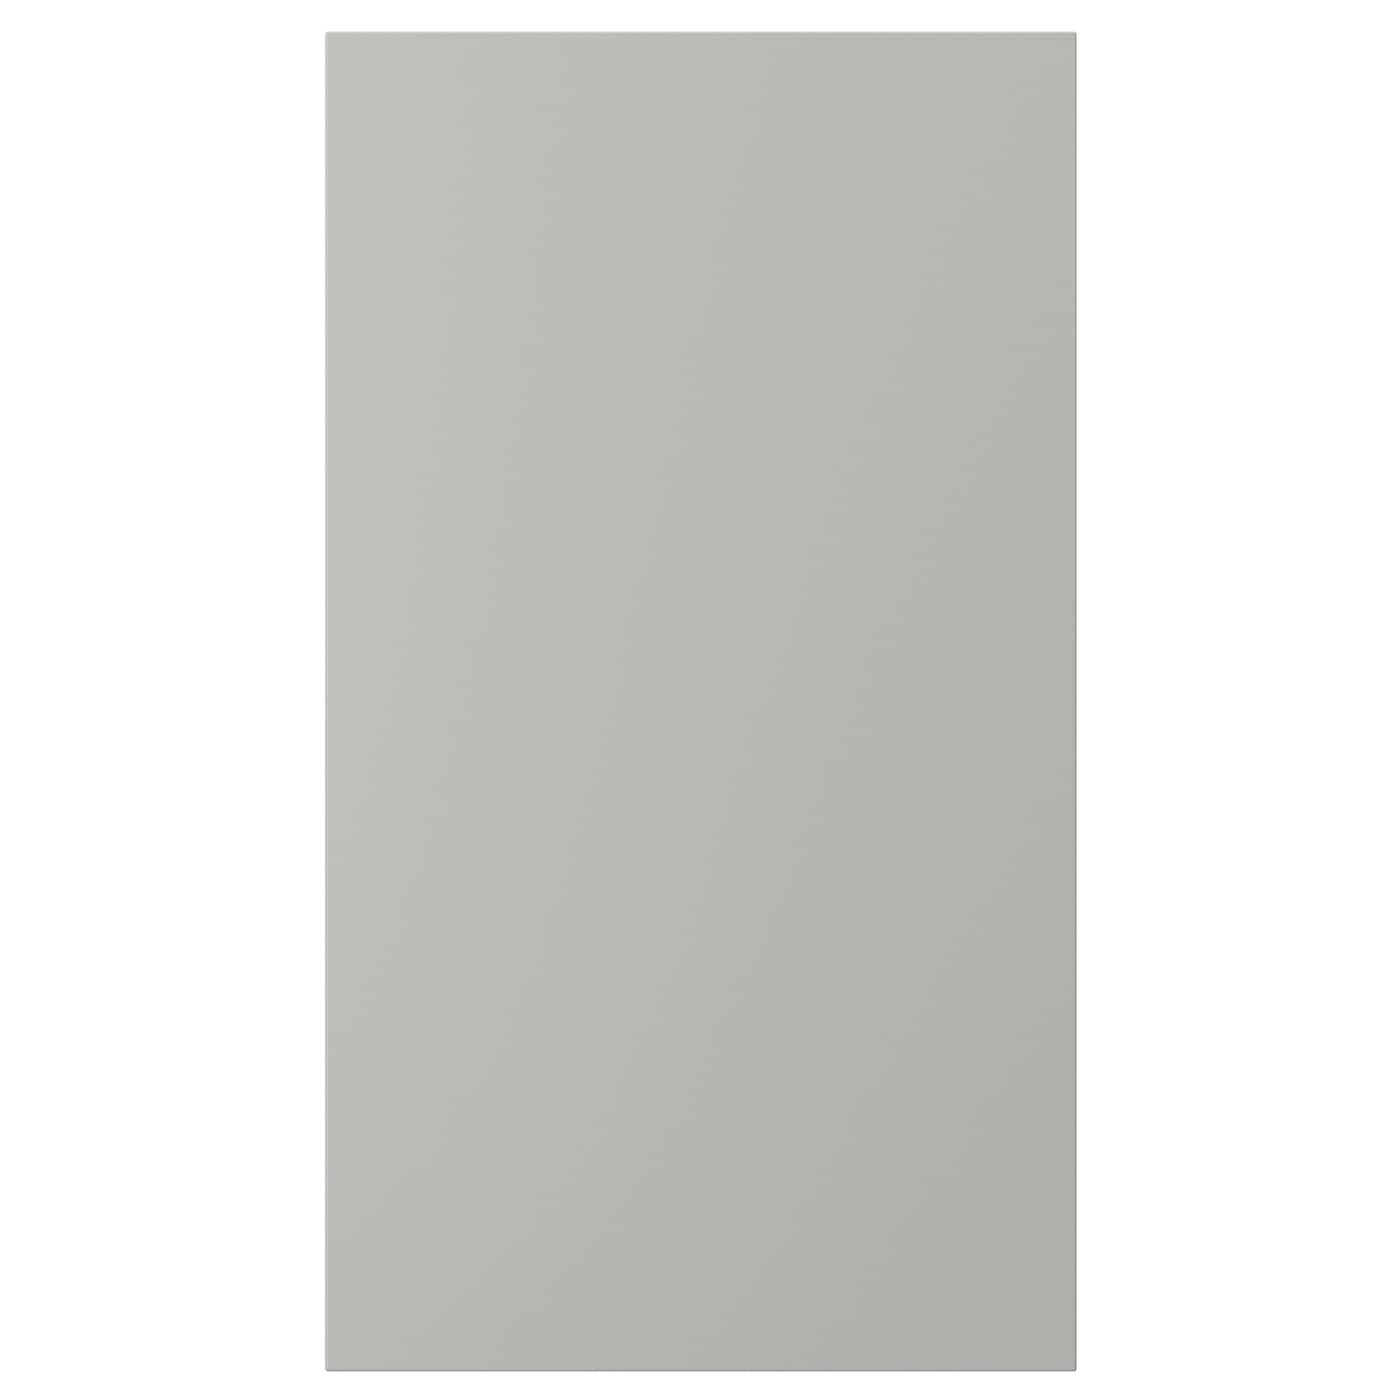 Накладная панель - HAVSTORP  IKEA/ ХАВСТОРП ИКЕА,  80х45 см, серый